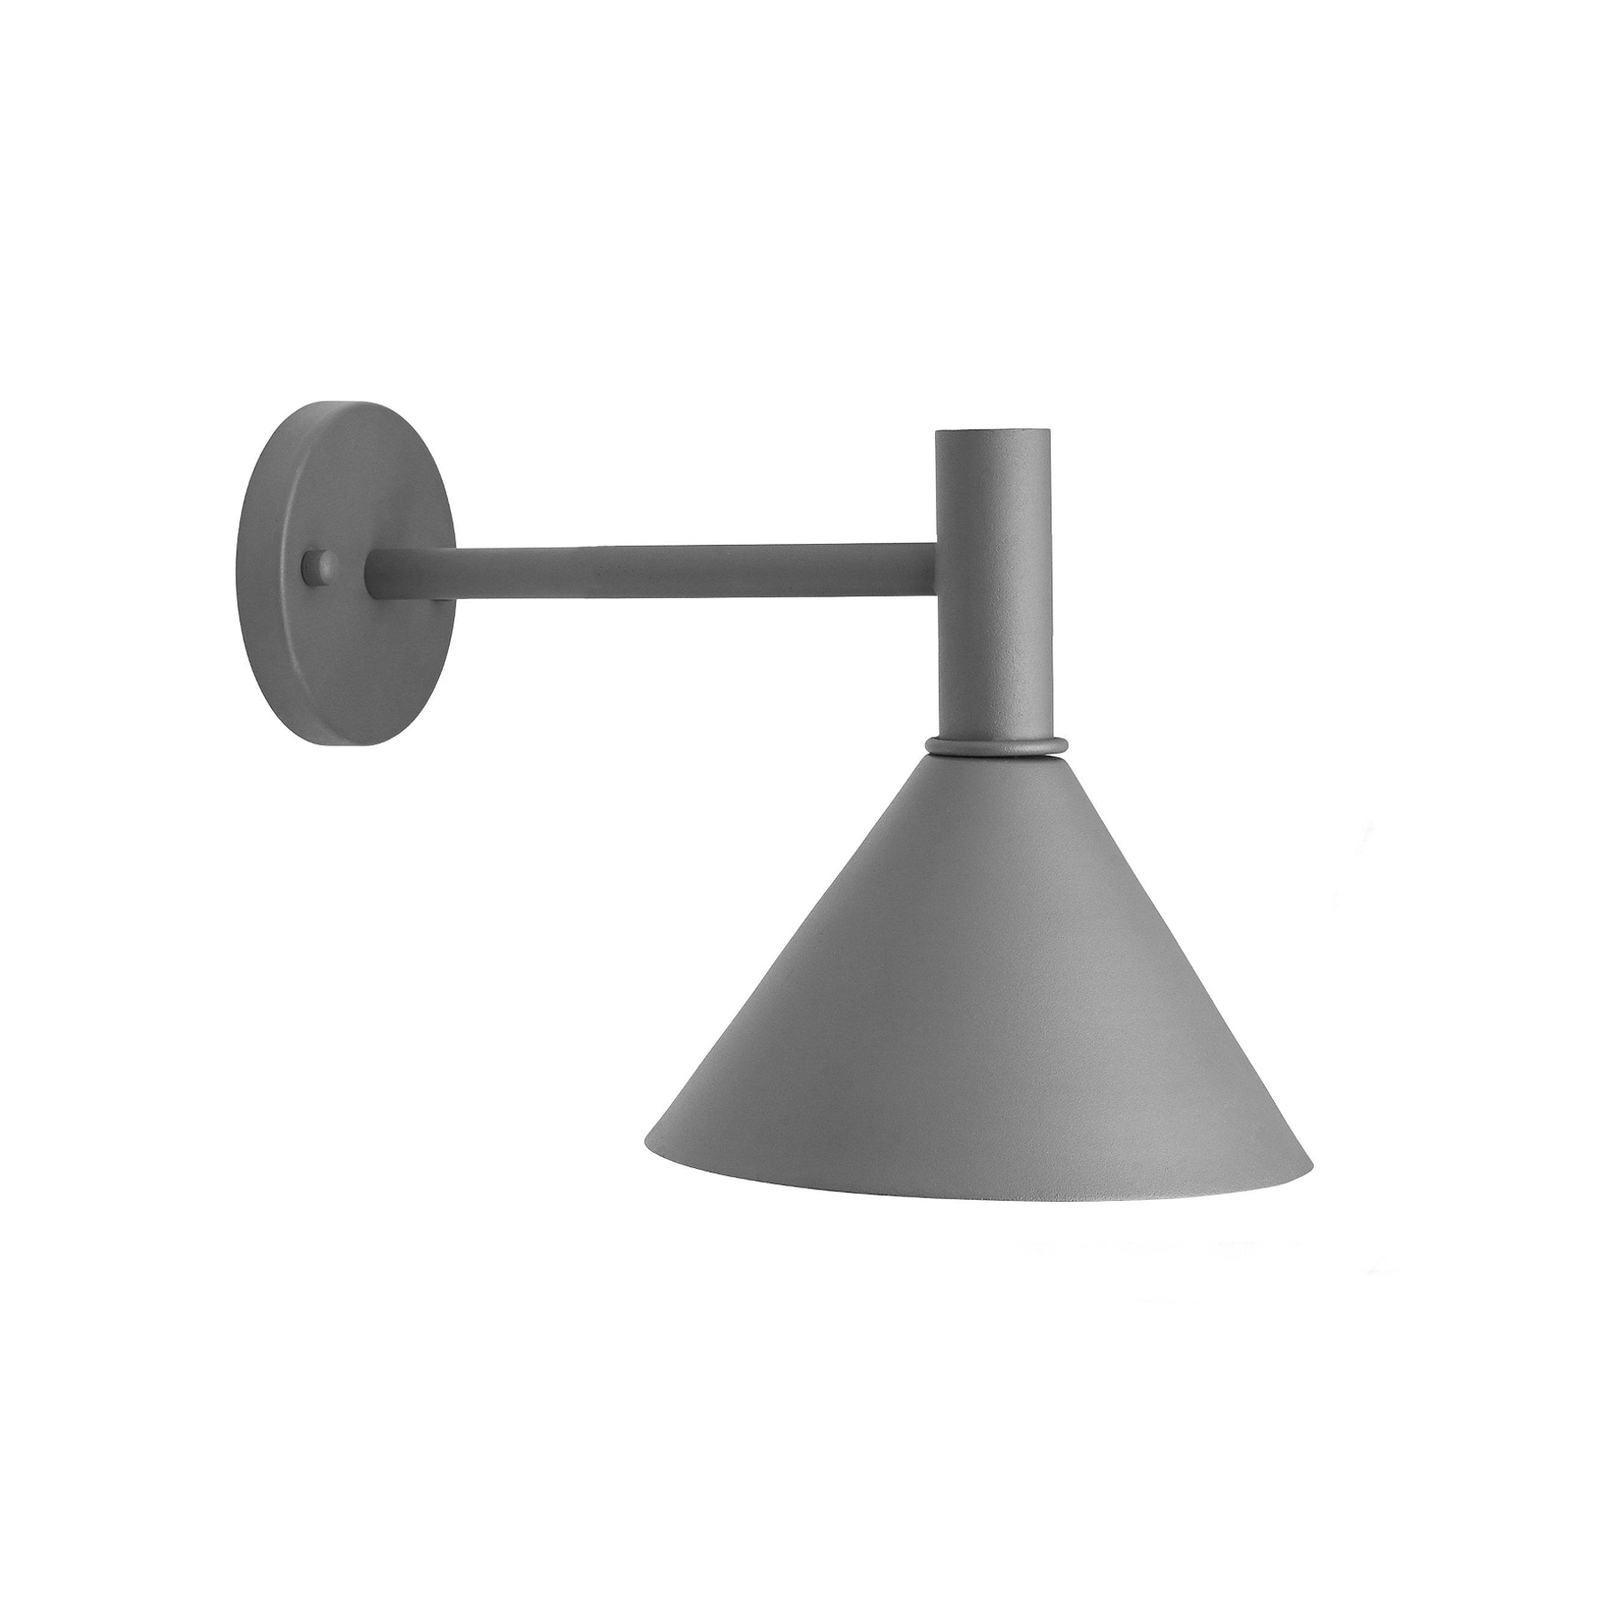 PR Home Minitripp outdoor wall lamp, grey